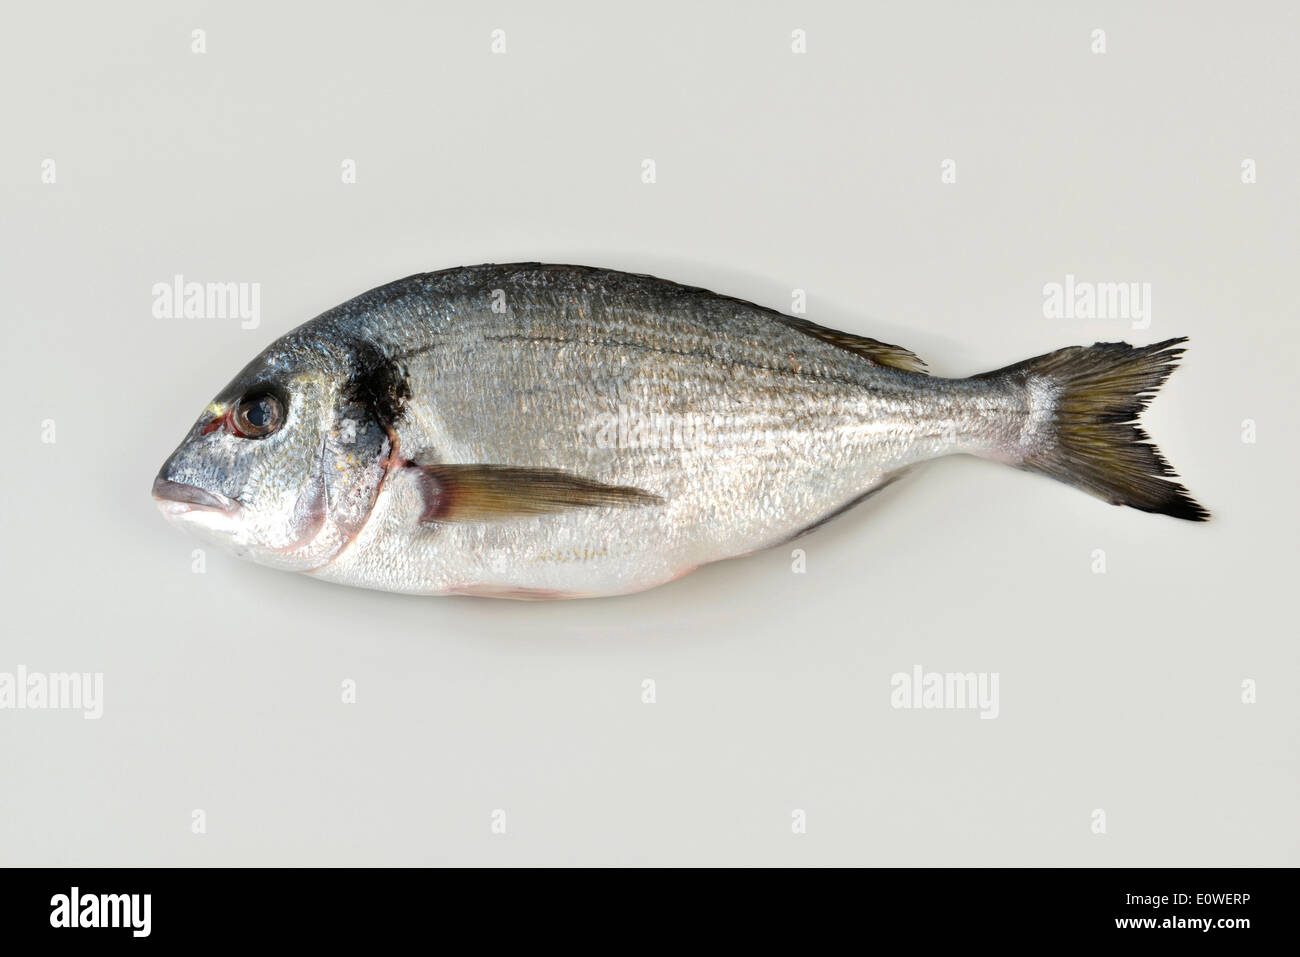 Gilt-head Bream ((Sparus aurata). Dead fish. Studio picture against a white background Stock Photo